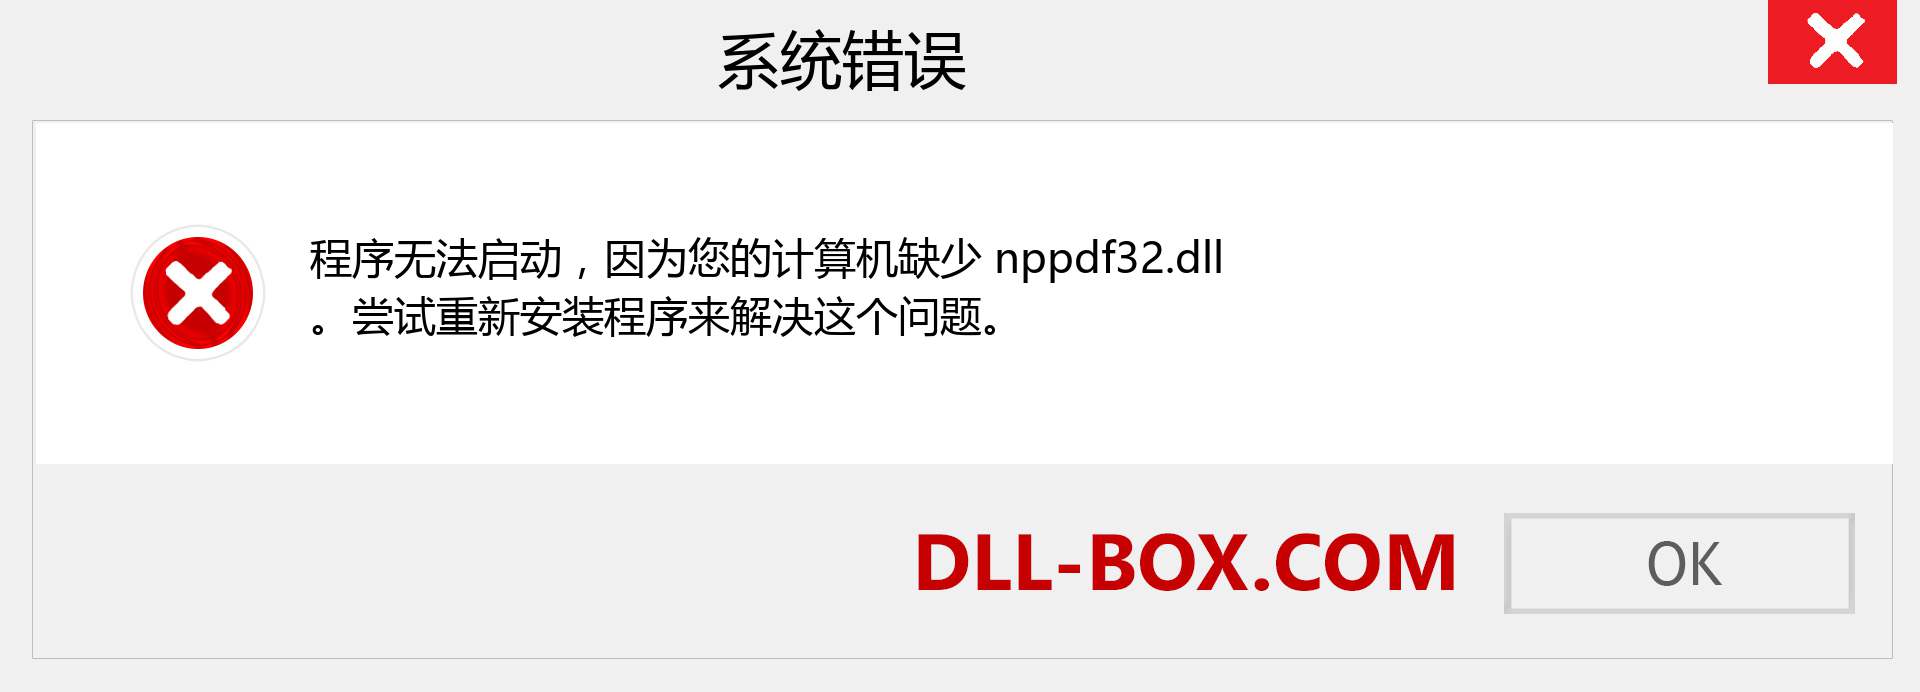 nppdf32.dll 文件丢失？。 适用于 Windows 7、8、10 的下载 - 修复 Windows、照片、图像上的 nppdf32 dll 丢失错误